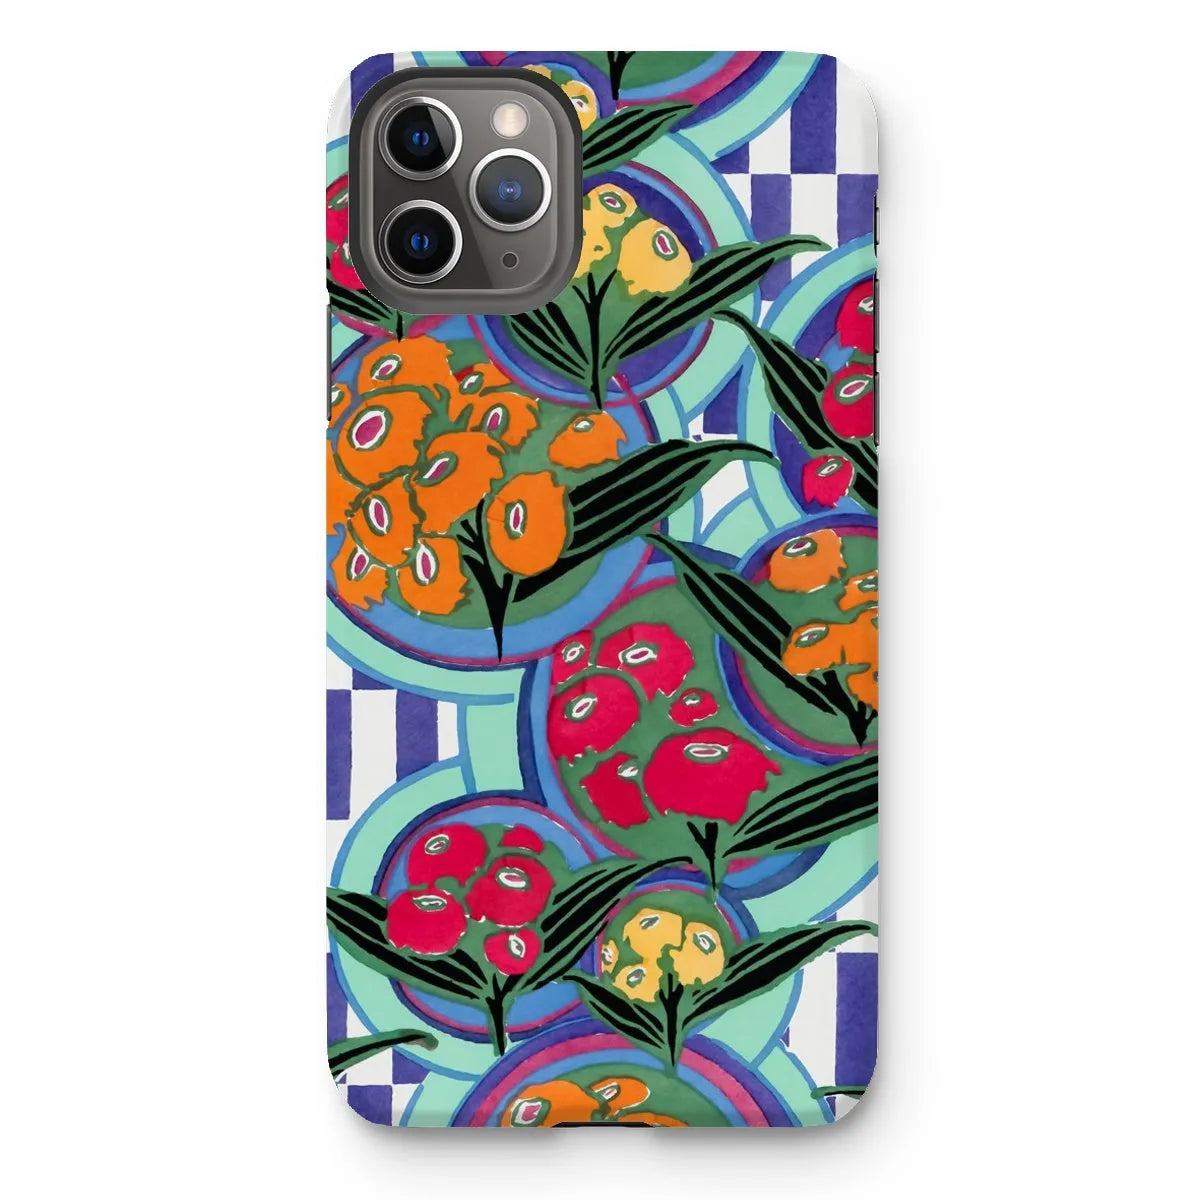 Vibrant Floral Aesthetic Art Phone Case - E.a. Séguy - Iphone 11 Pro Max / Matte - Mobile Phone Cases - Aesthetic Art